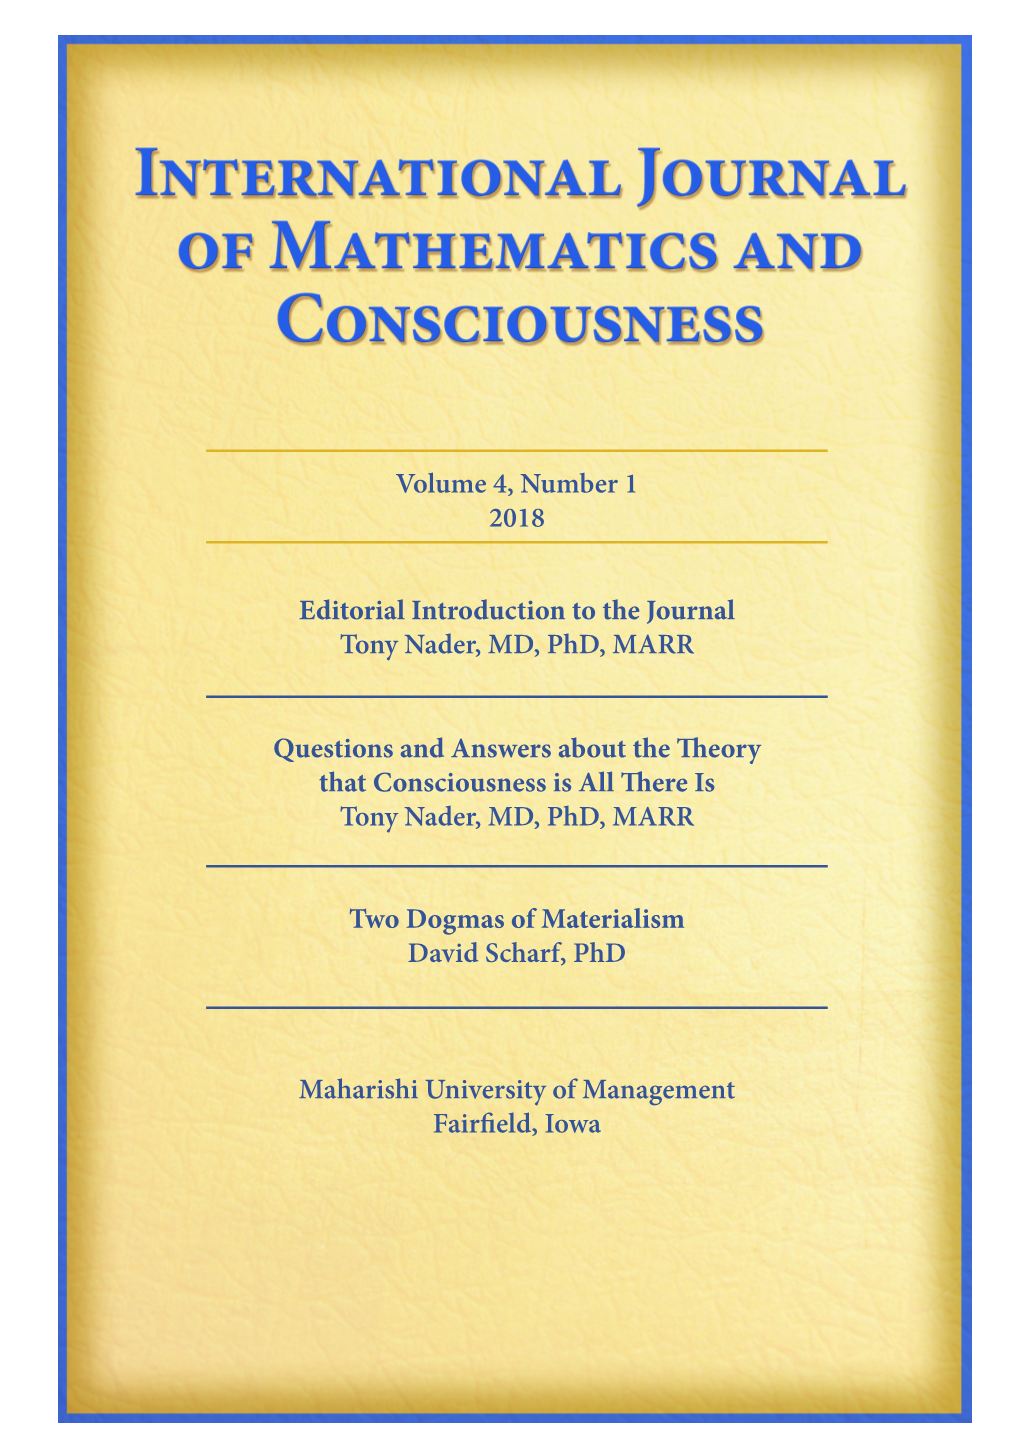 International Journal of Mathematics and Consciousness • Volume 4, Number 1, 2018